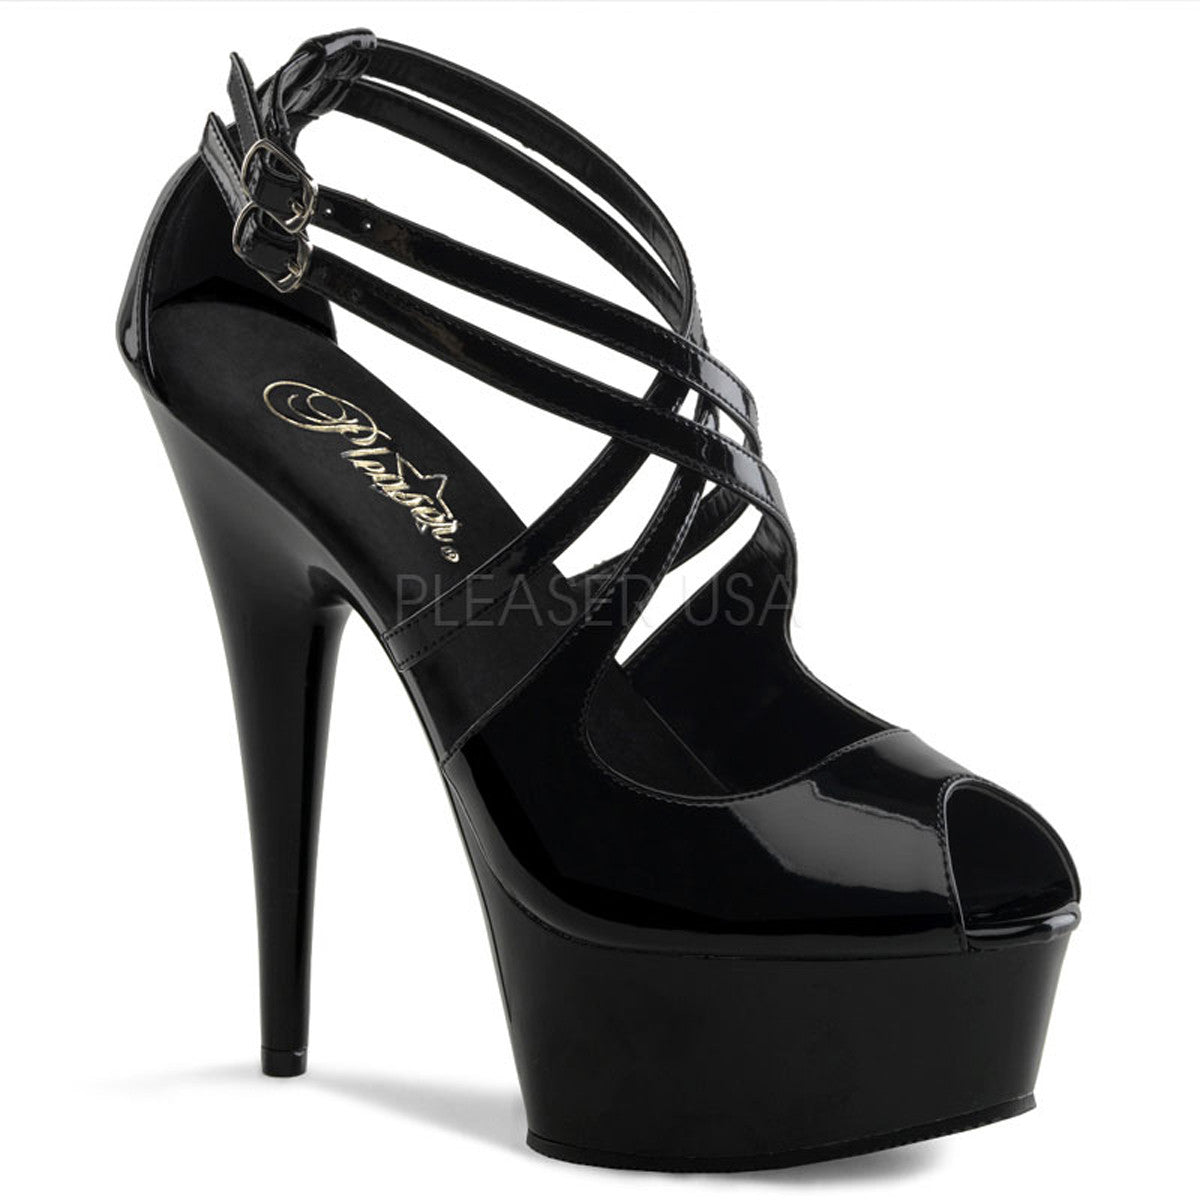 PLEASER DELIGHT-612 Black Ankle Strap Sandals - Shoecup.com